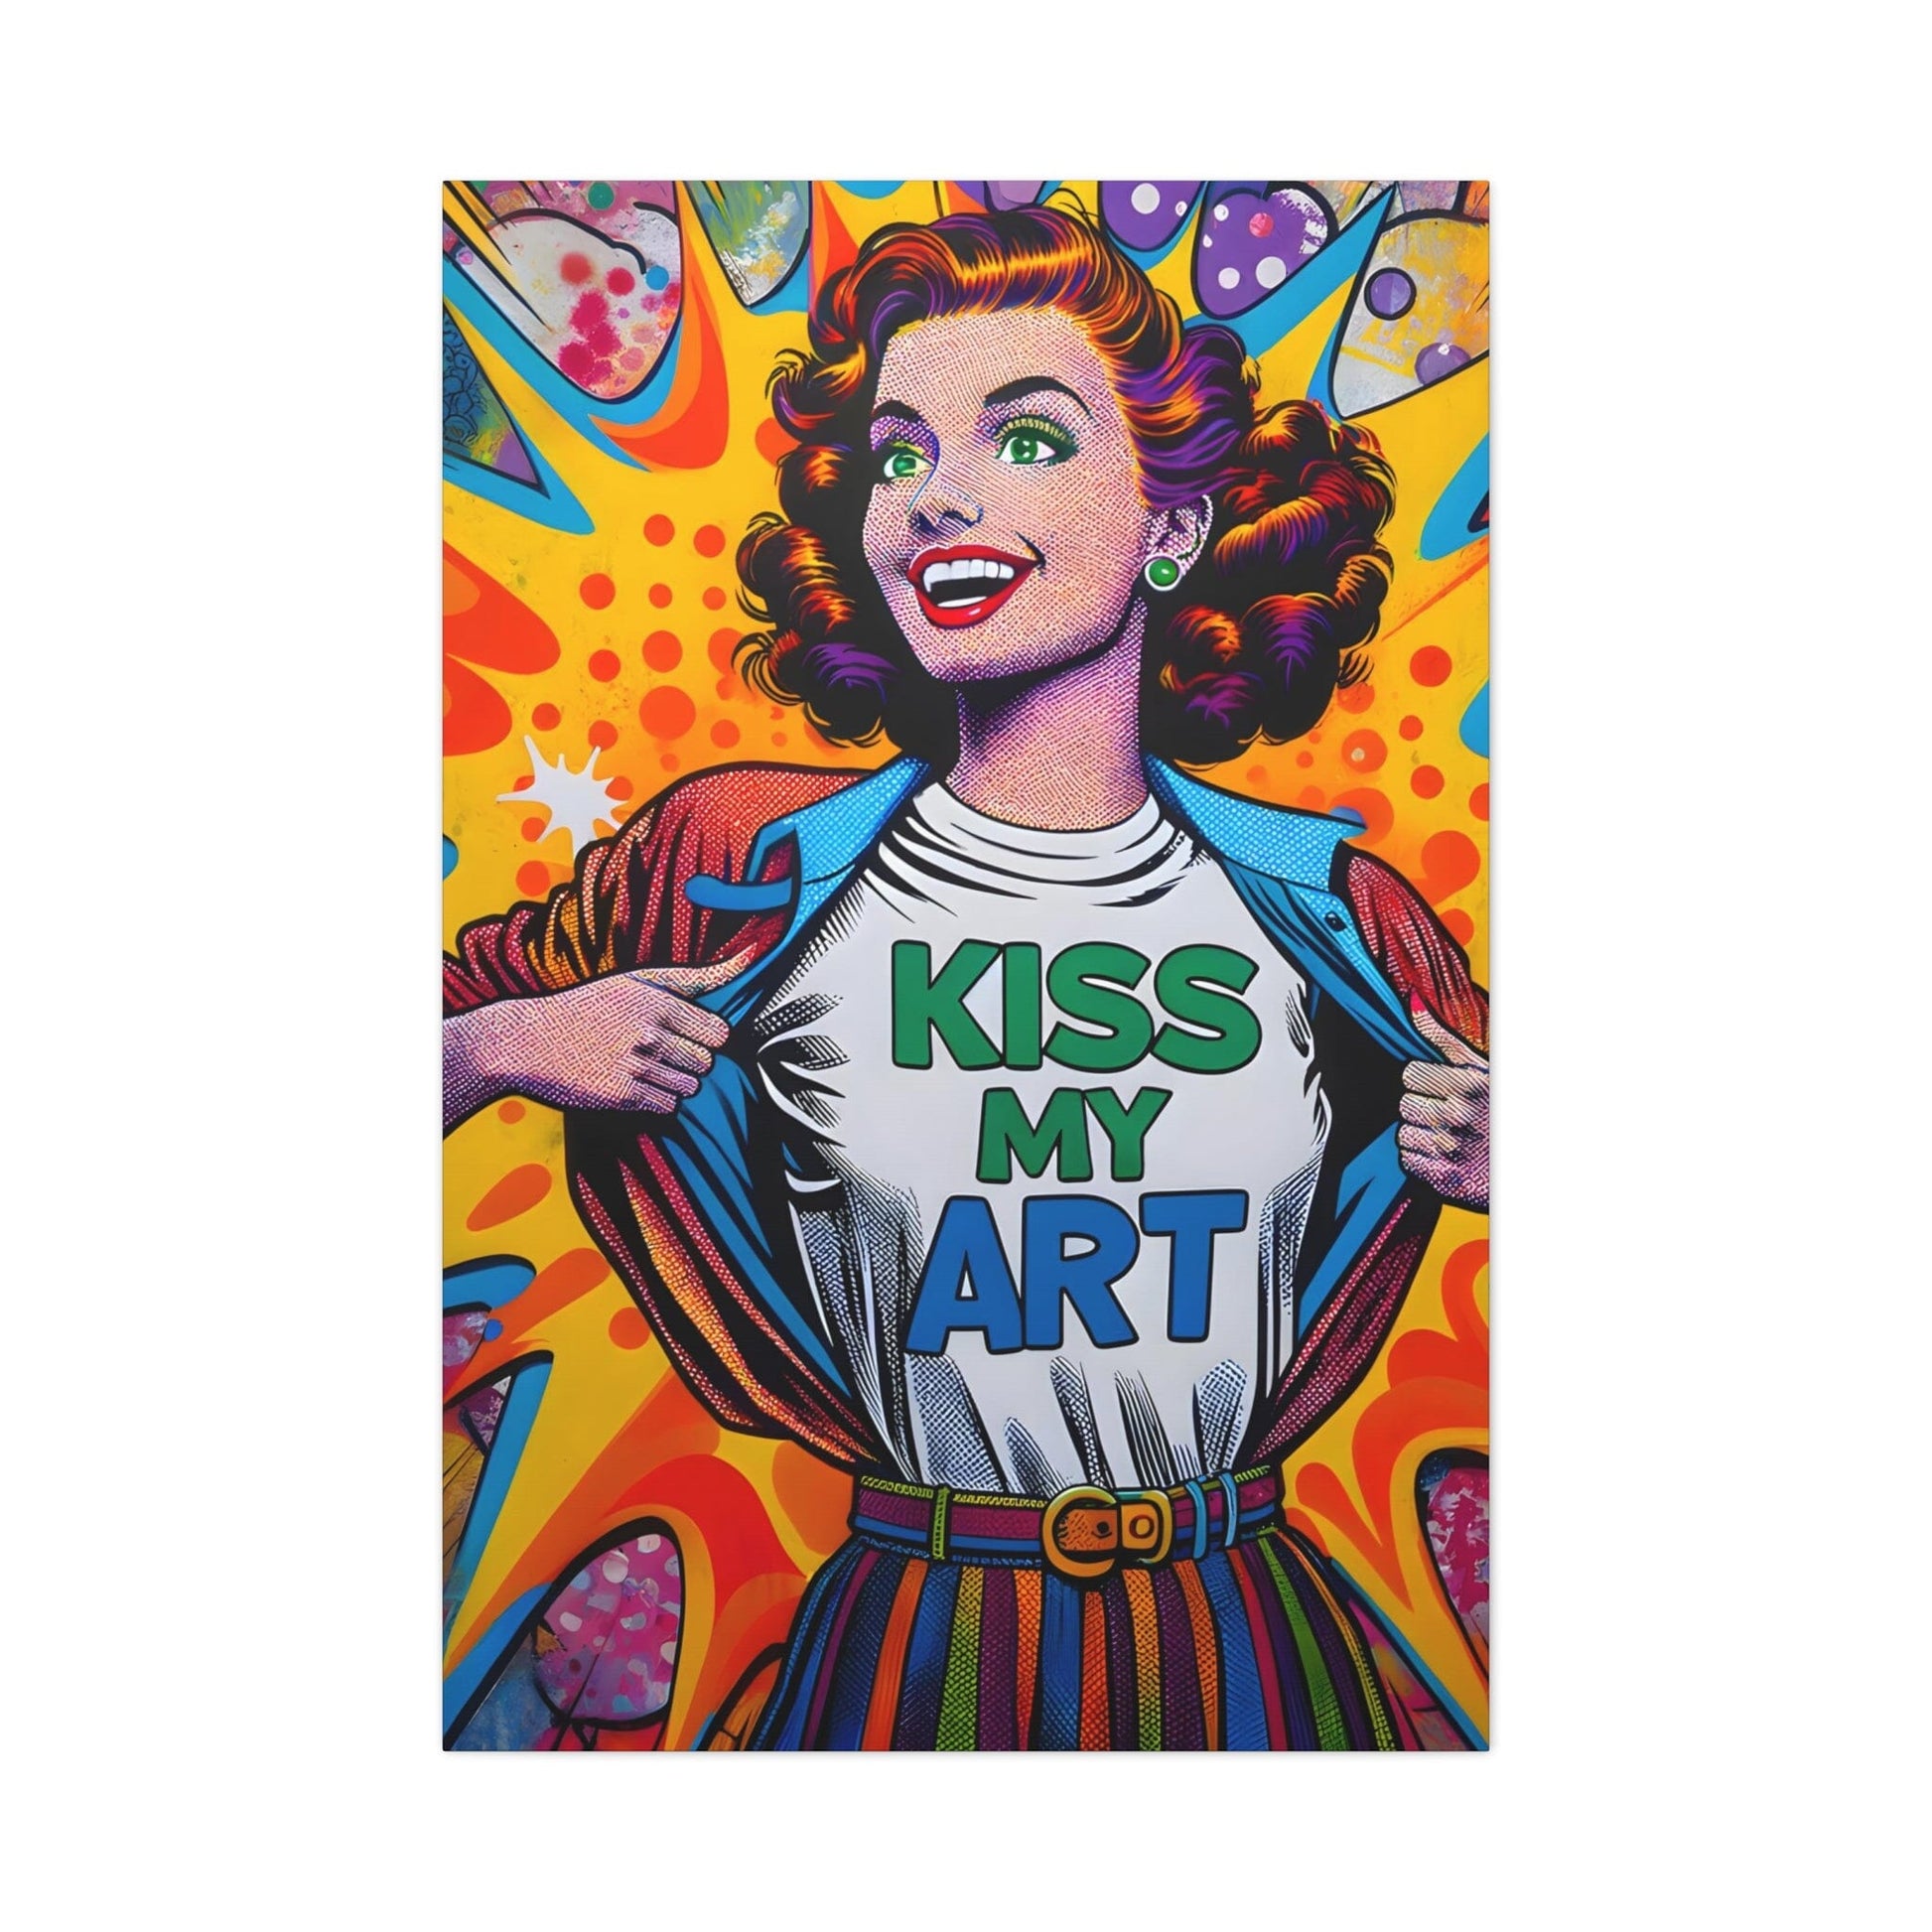 Alvin Goldman. Chromatic Charm: Kiss My Art. Exclusive Canvas Print